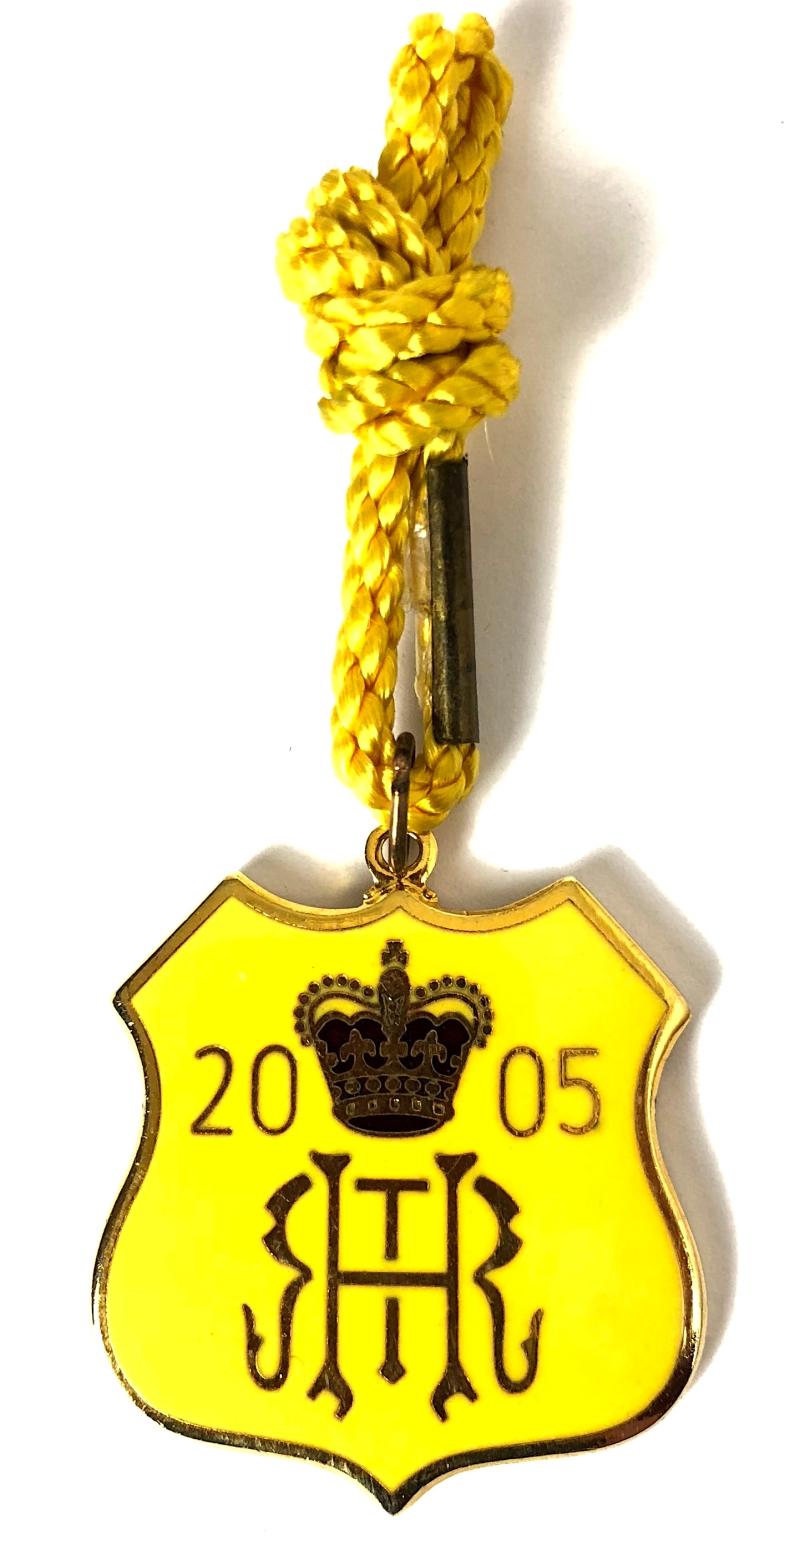 2005 Henley Royal Regatta stewards enclosure badge